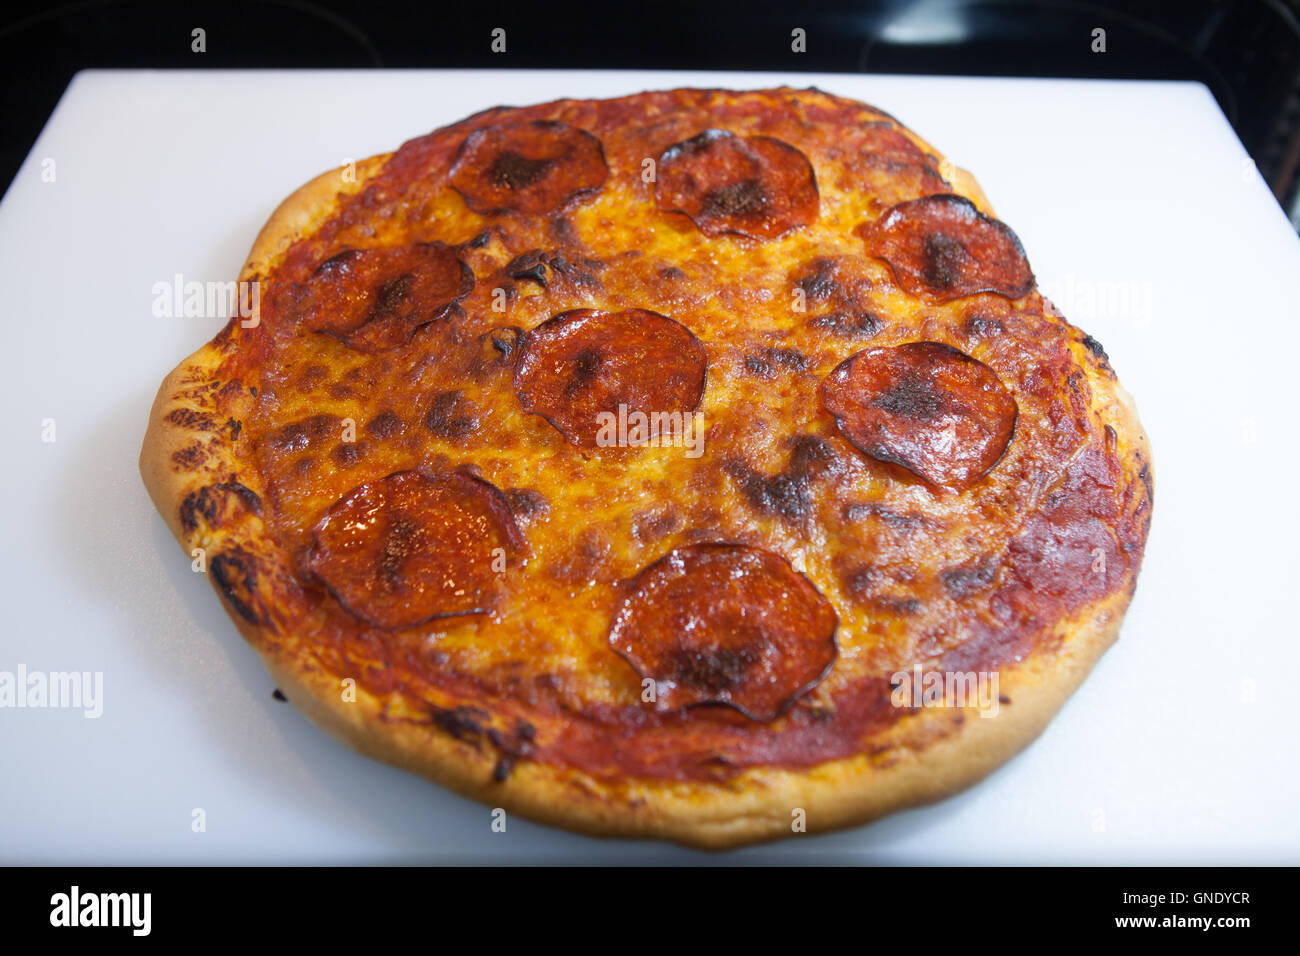 Pepperoni Pizza Stock Photo